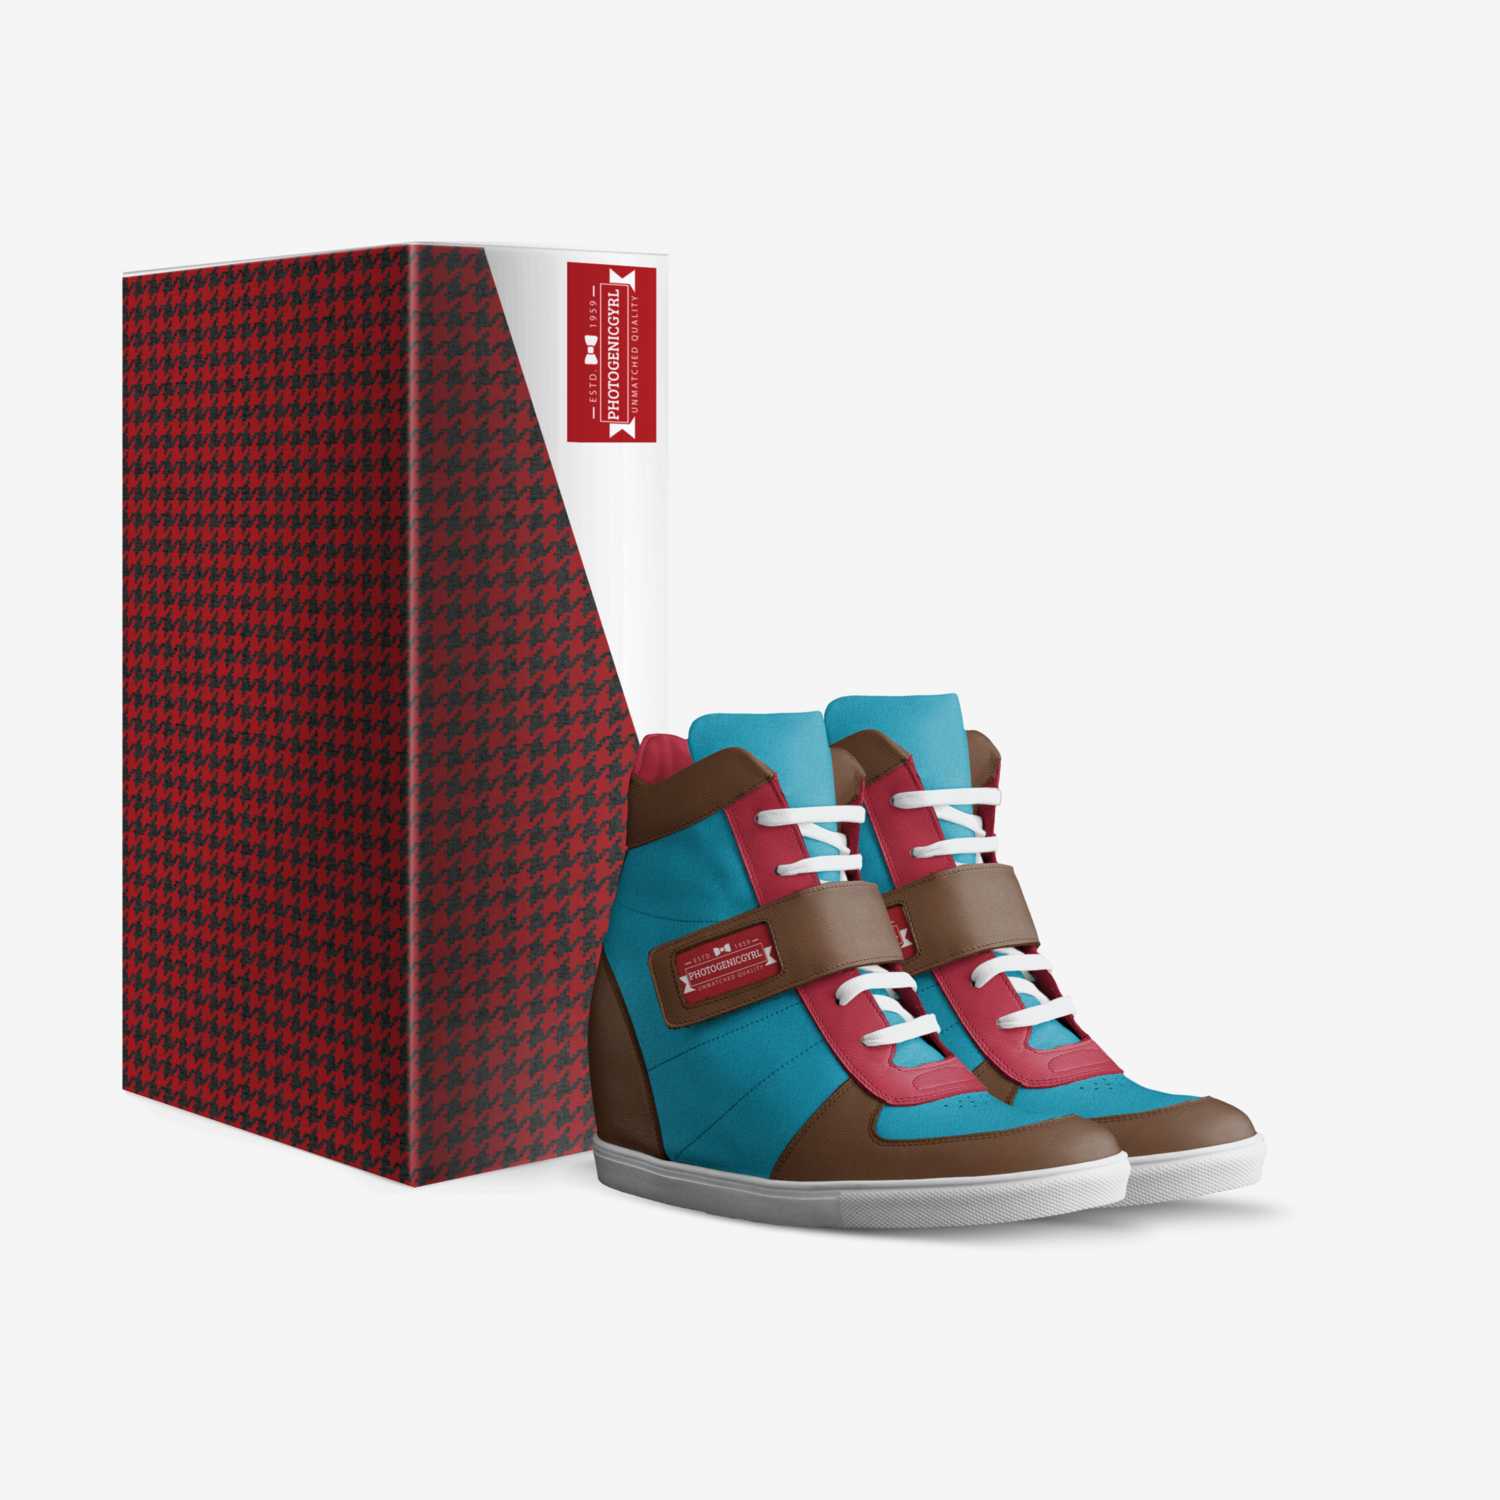 Photogenicgyrl custom made in Italy shoes by Monalisamonalisa | Box view